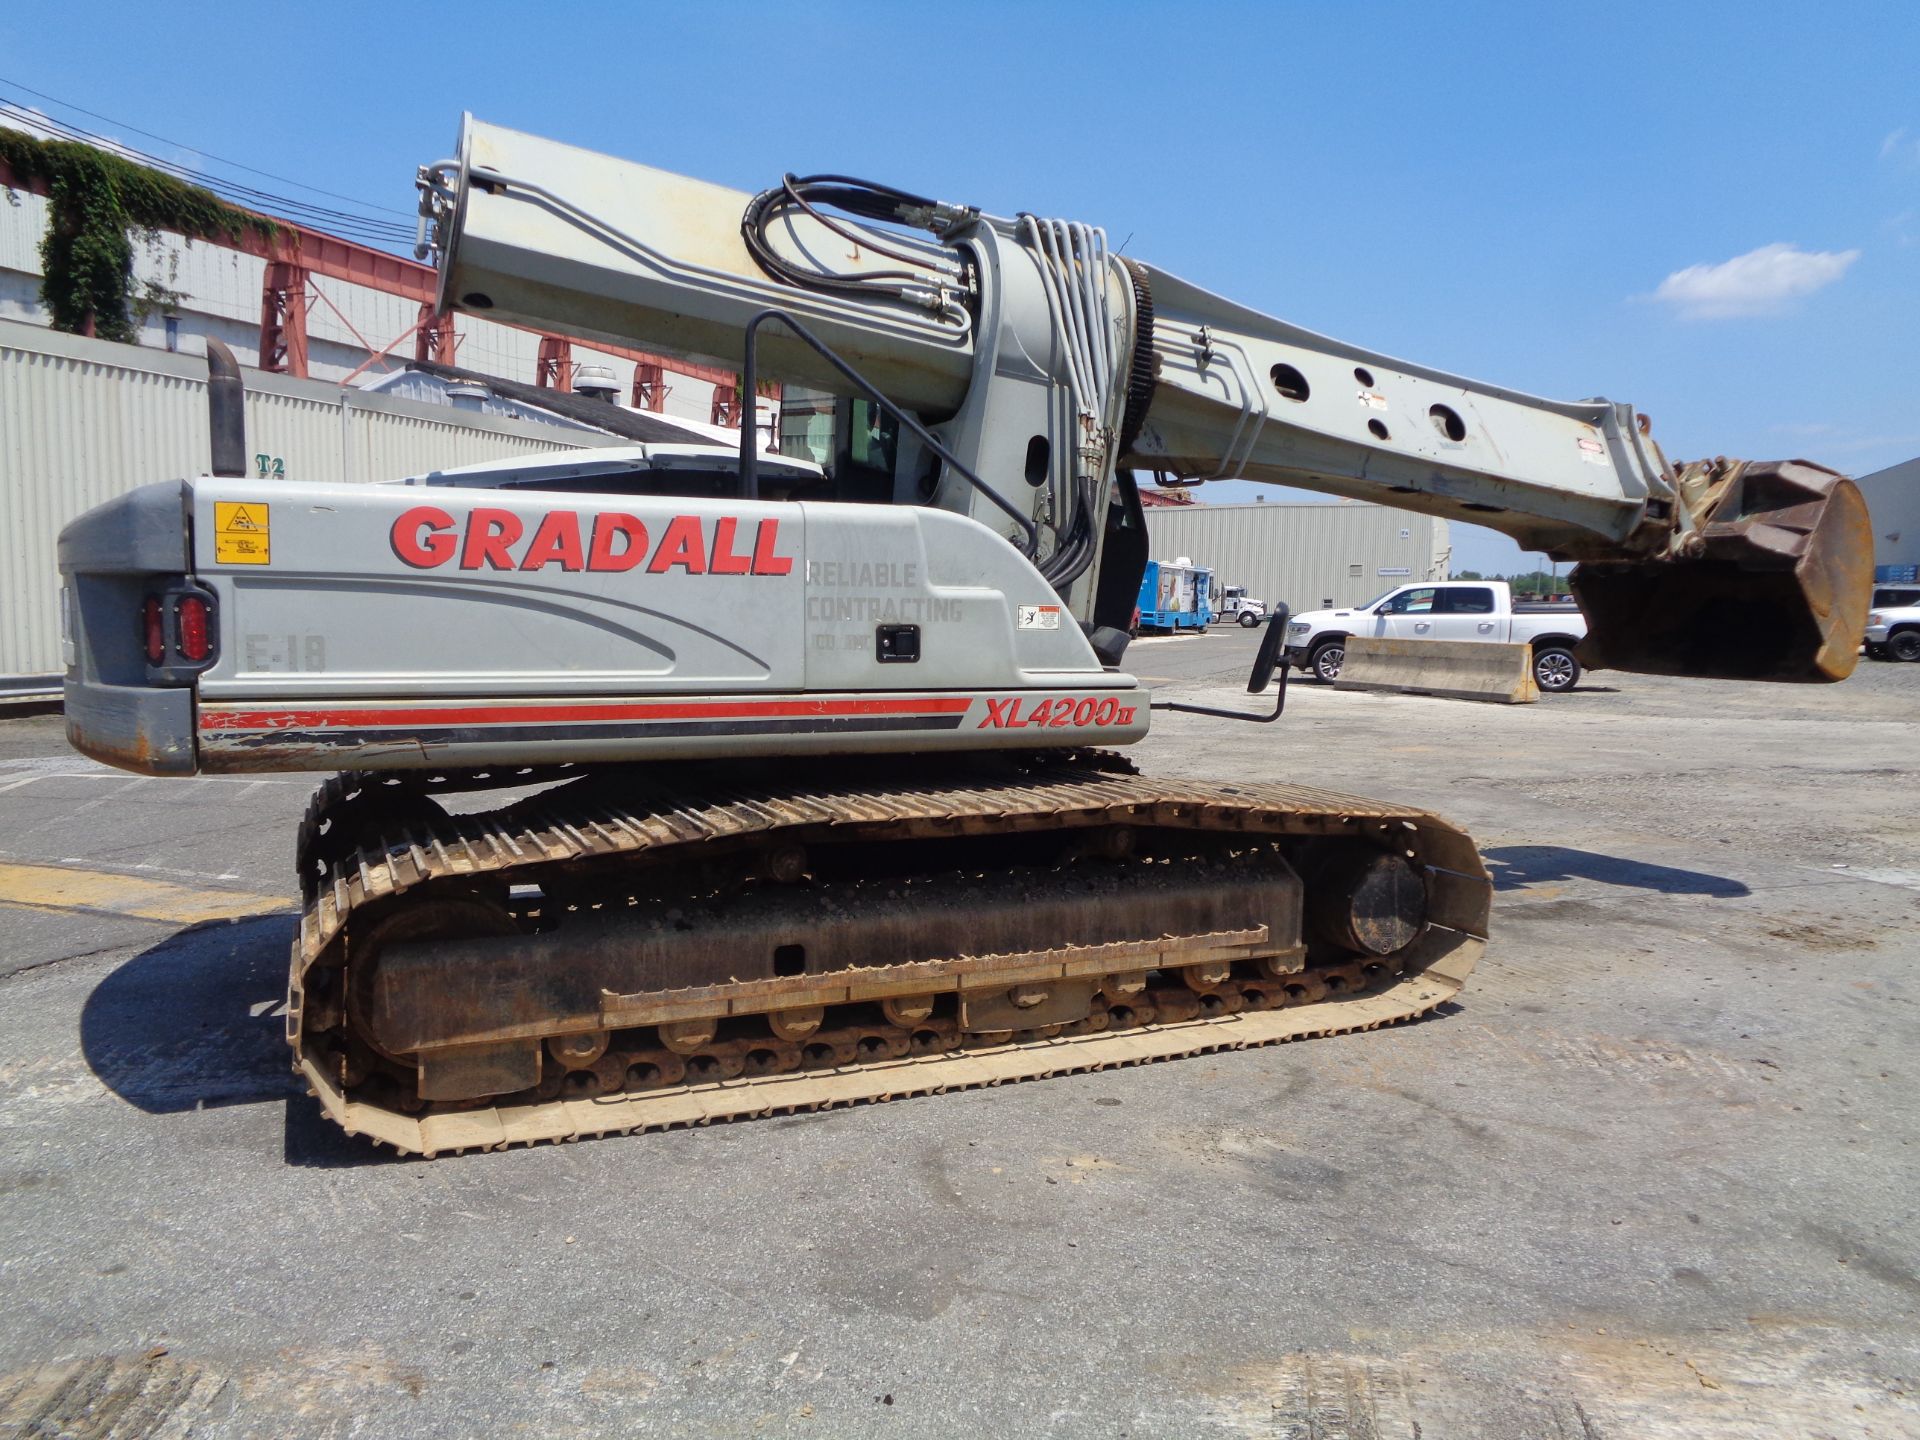 2011 Gradall XL4200 Excavator - Image 4 of 14